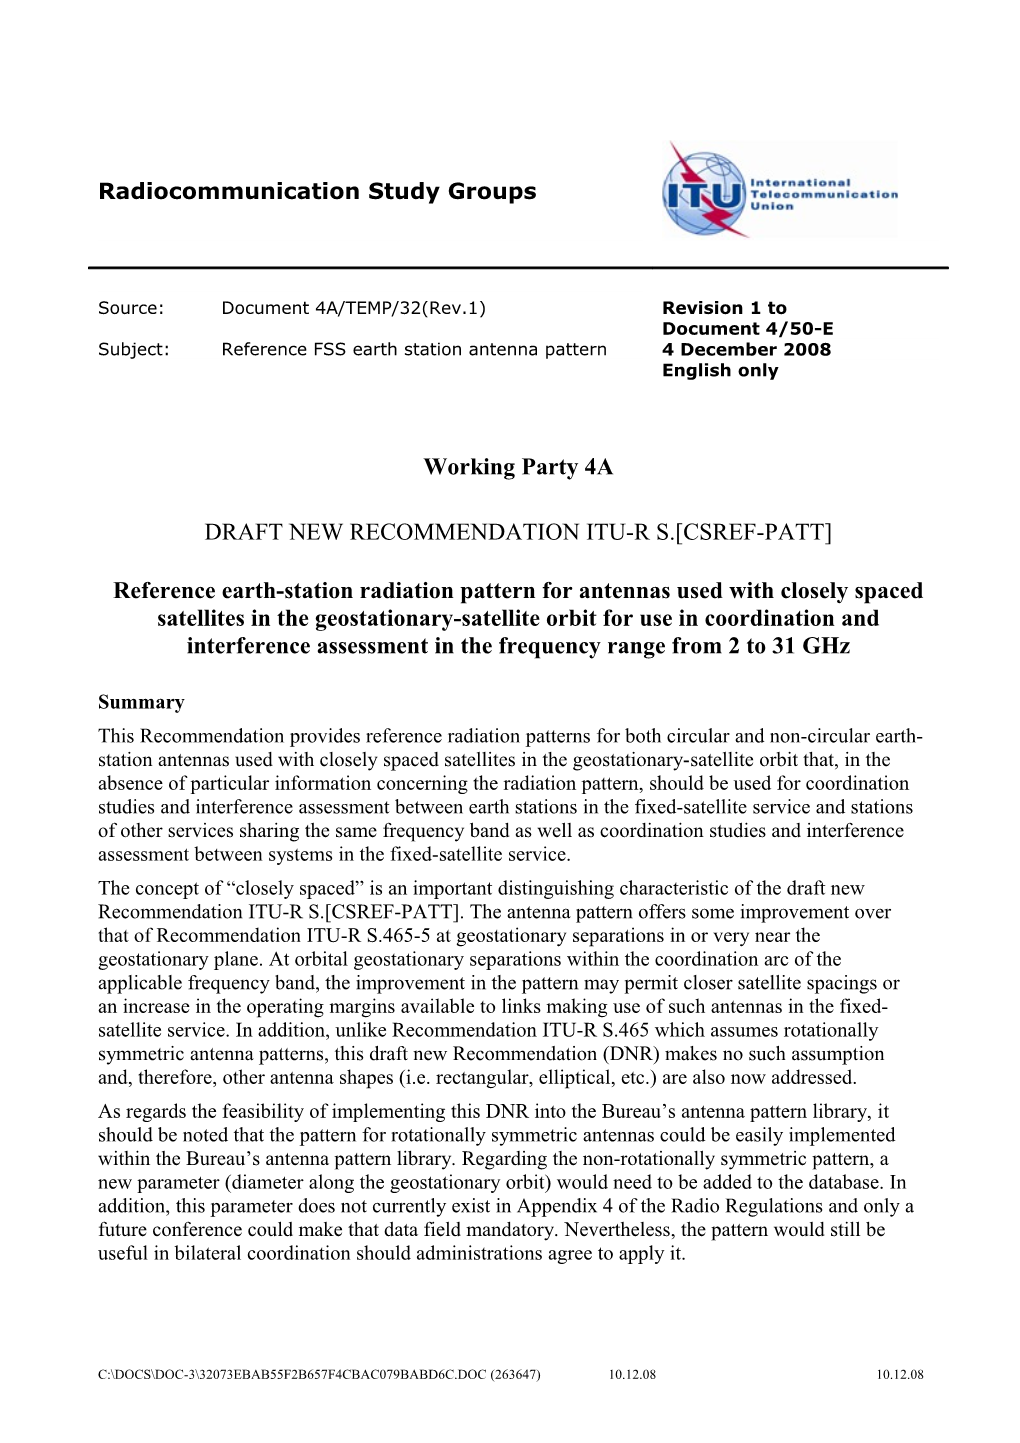 Draft New Recommendation Itu-R S. Csref-Patt